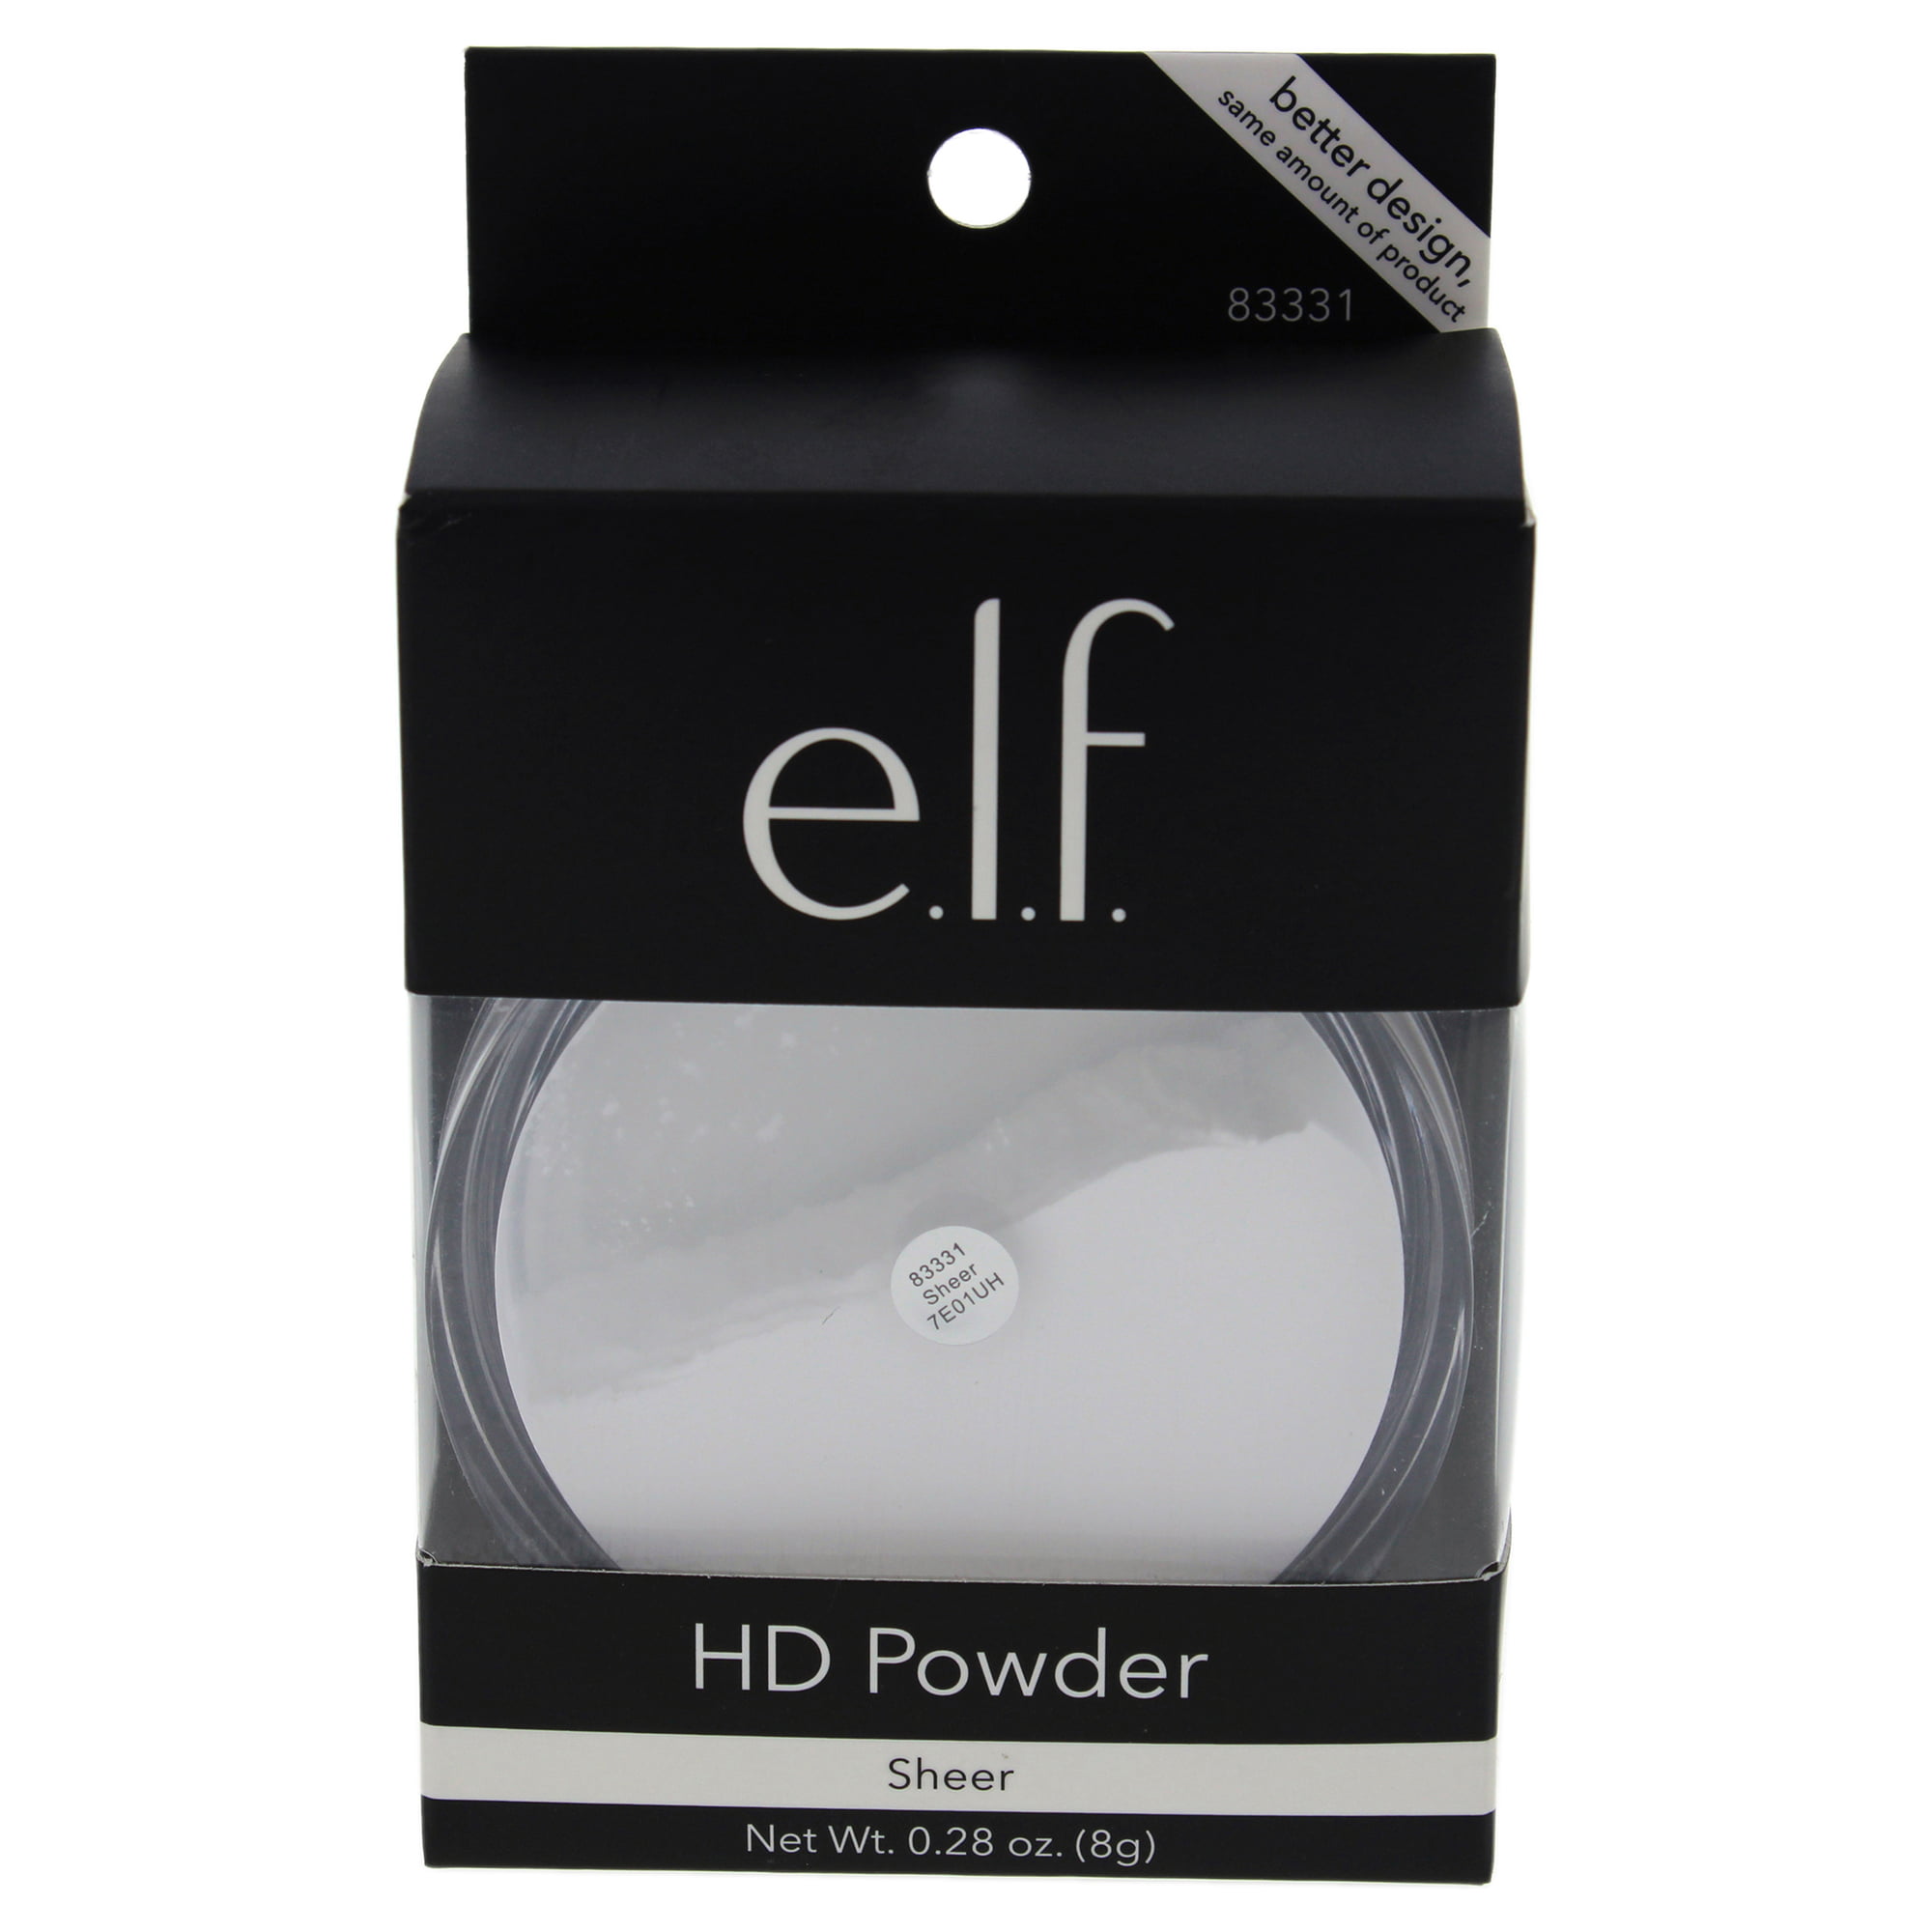 e.l.f. Studio High Definition Powder, Sheer - 0.28 oz compact